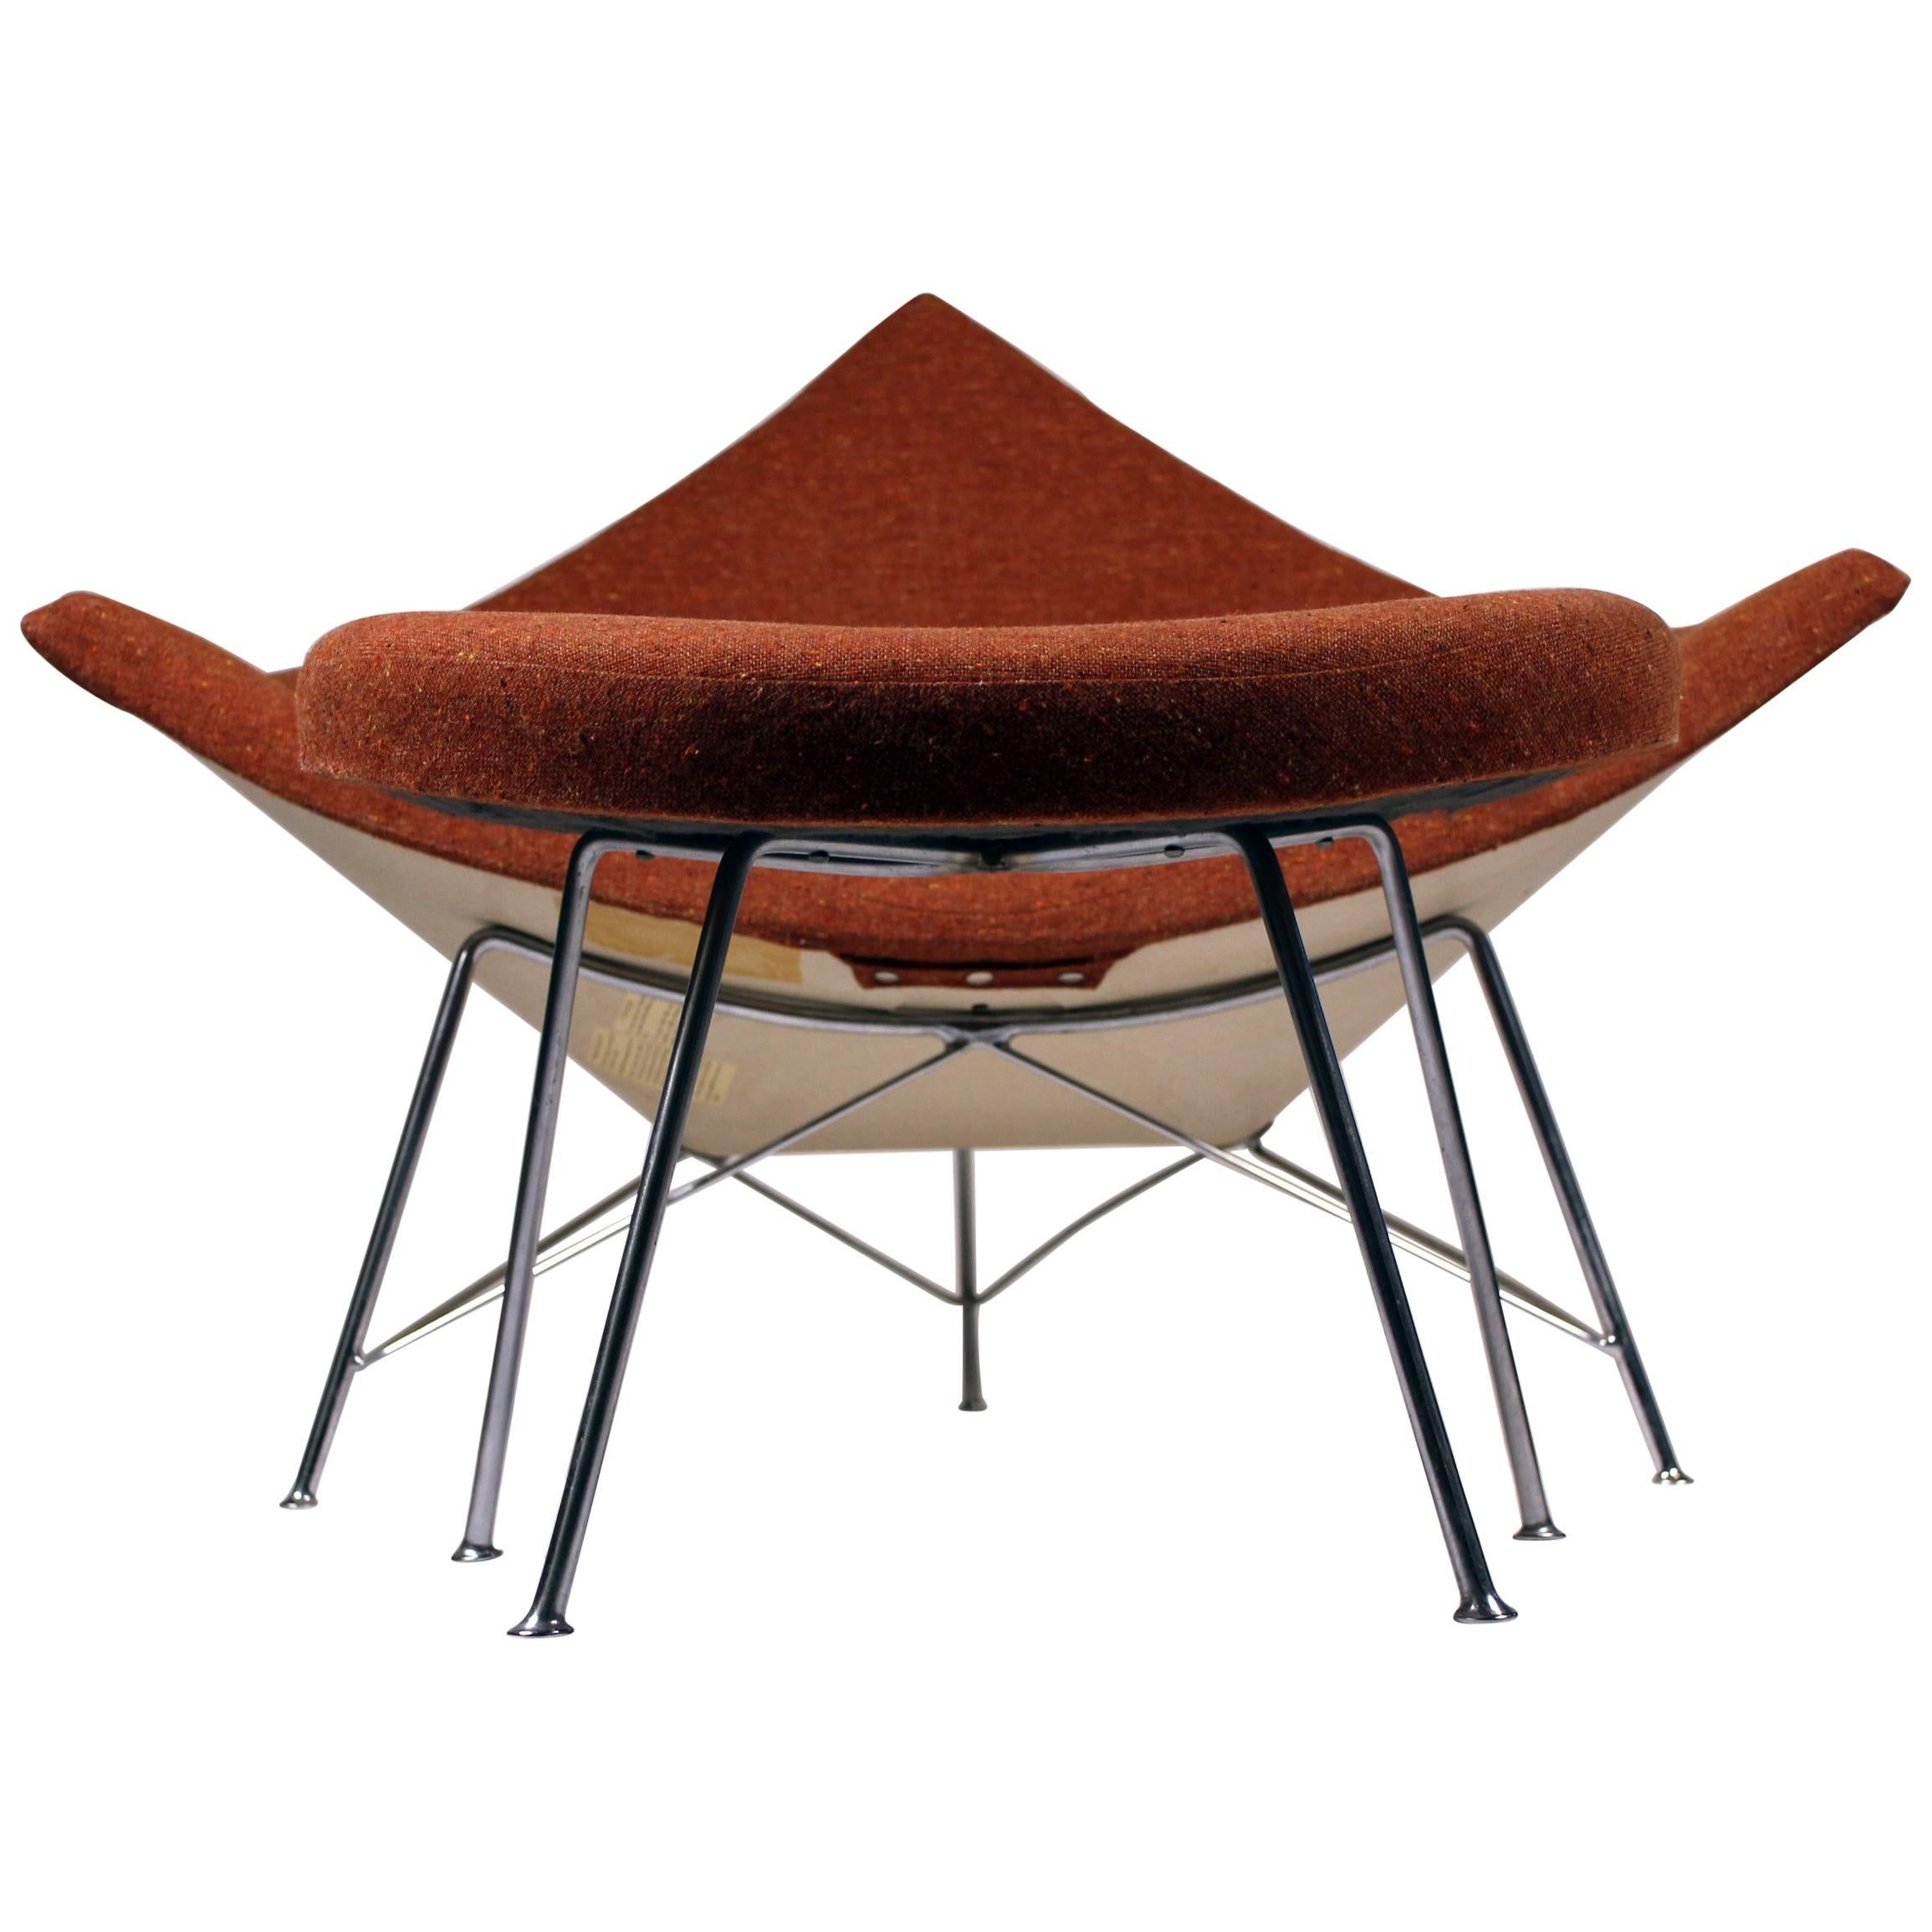 Coconut Ottoman – For Sale On 1stdibs | Coconut Chair Ottoman Intended For Coconut Ottomans (View 12 of 15)